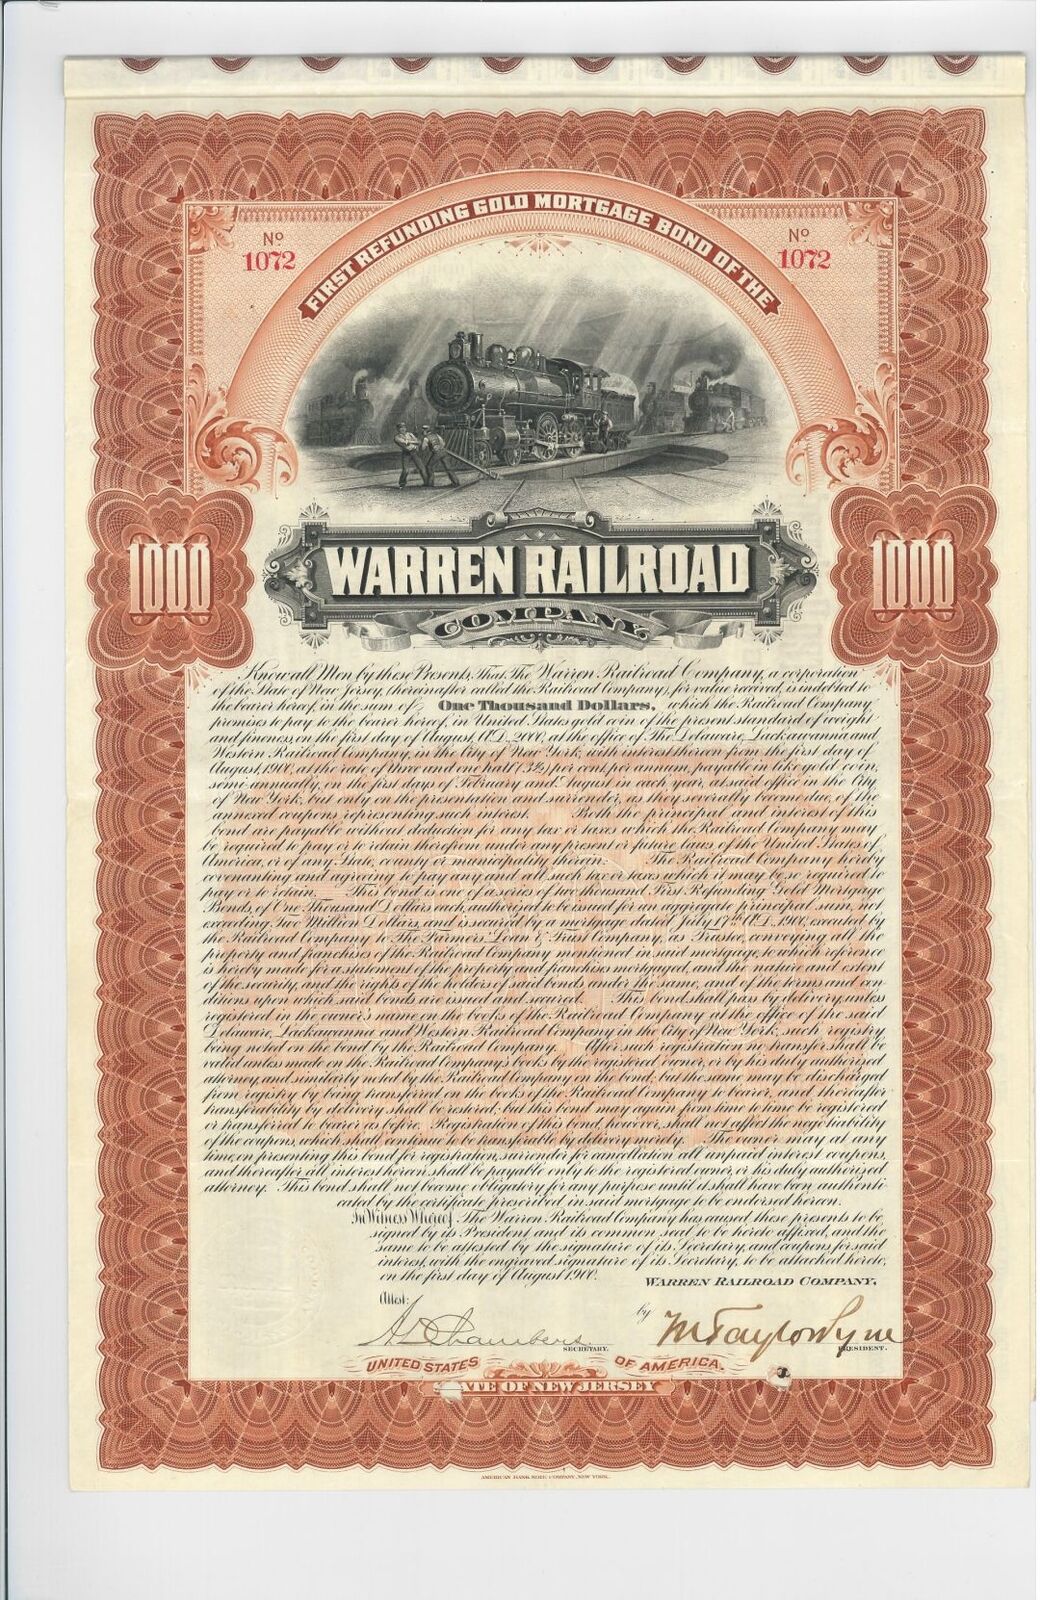 Warren Railroad Co. - 1900 dated $1,000 New Jersey Railway Bond - Railroad Bonds